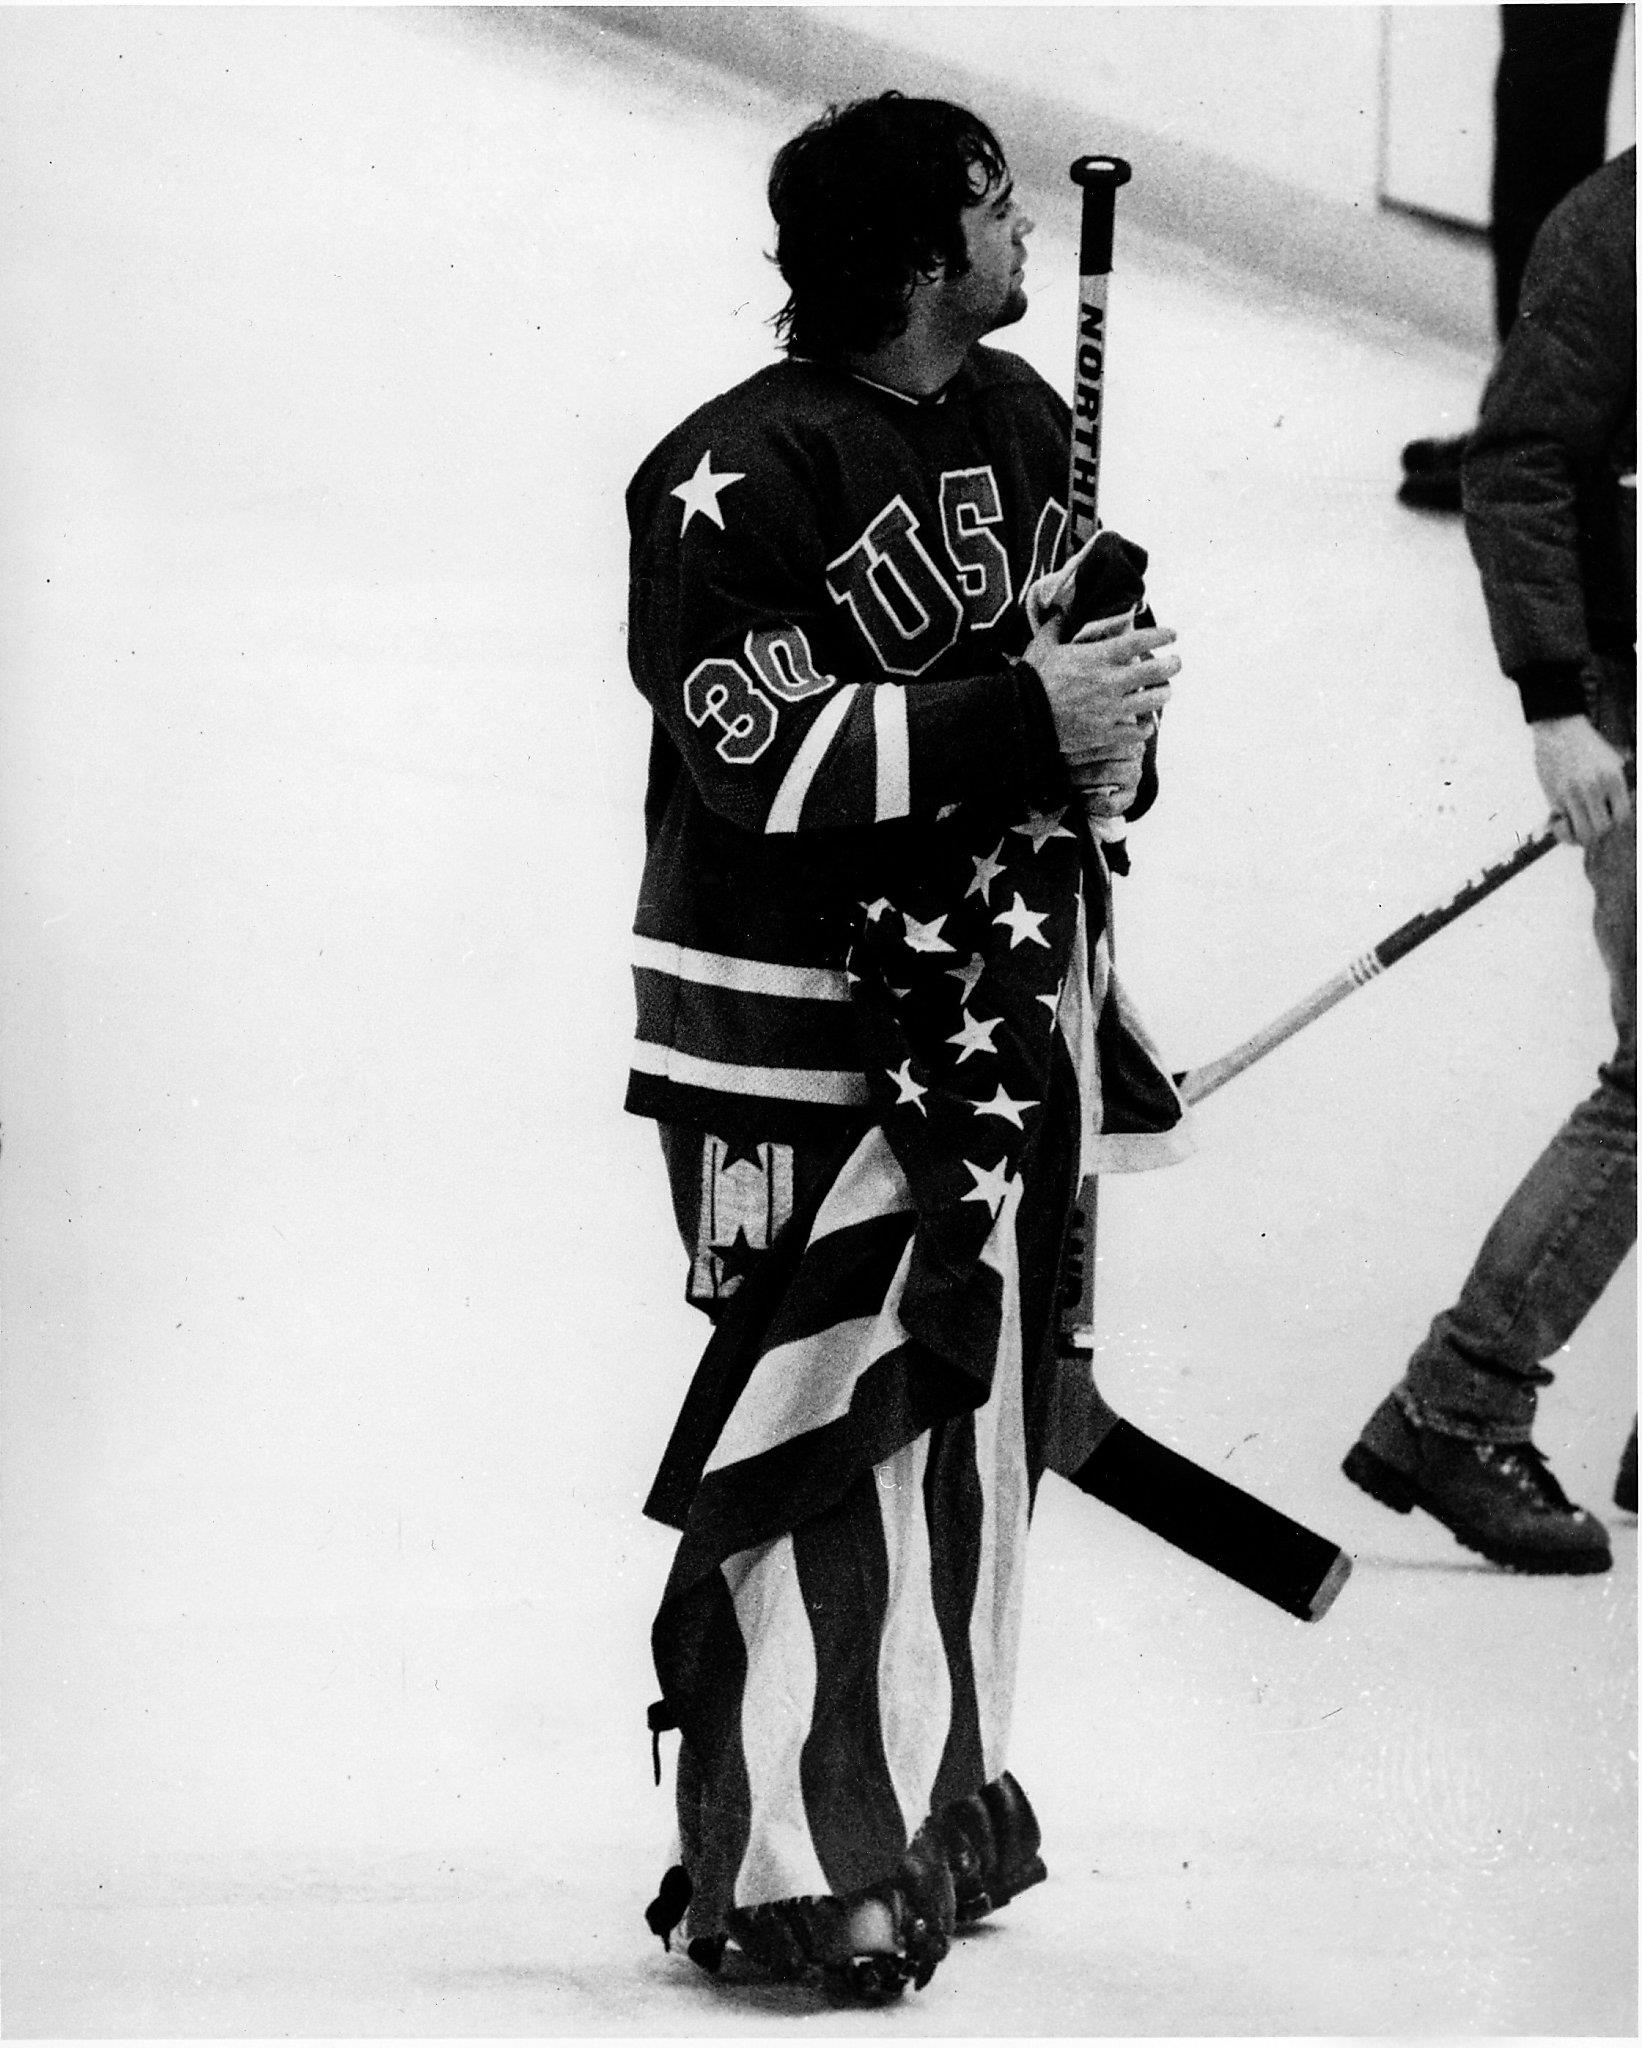 Jim Craig Signed 1980 USA Hockey Miracle on Ice Team on Gold Medal Podium